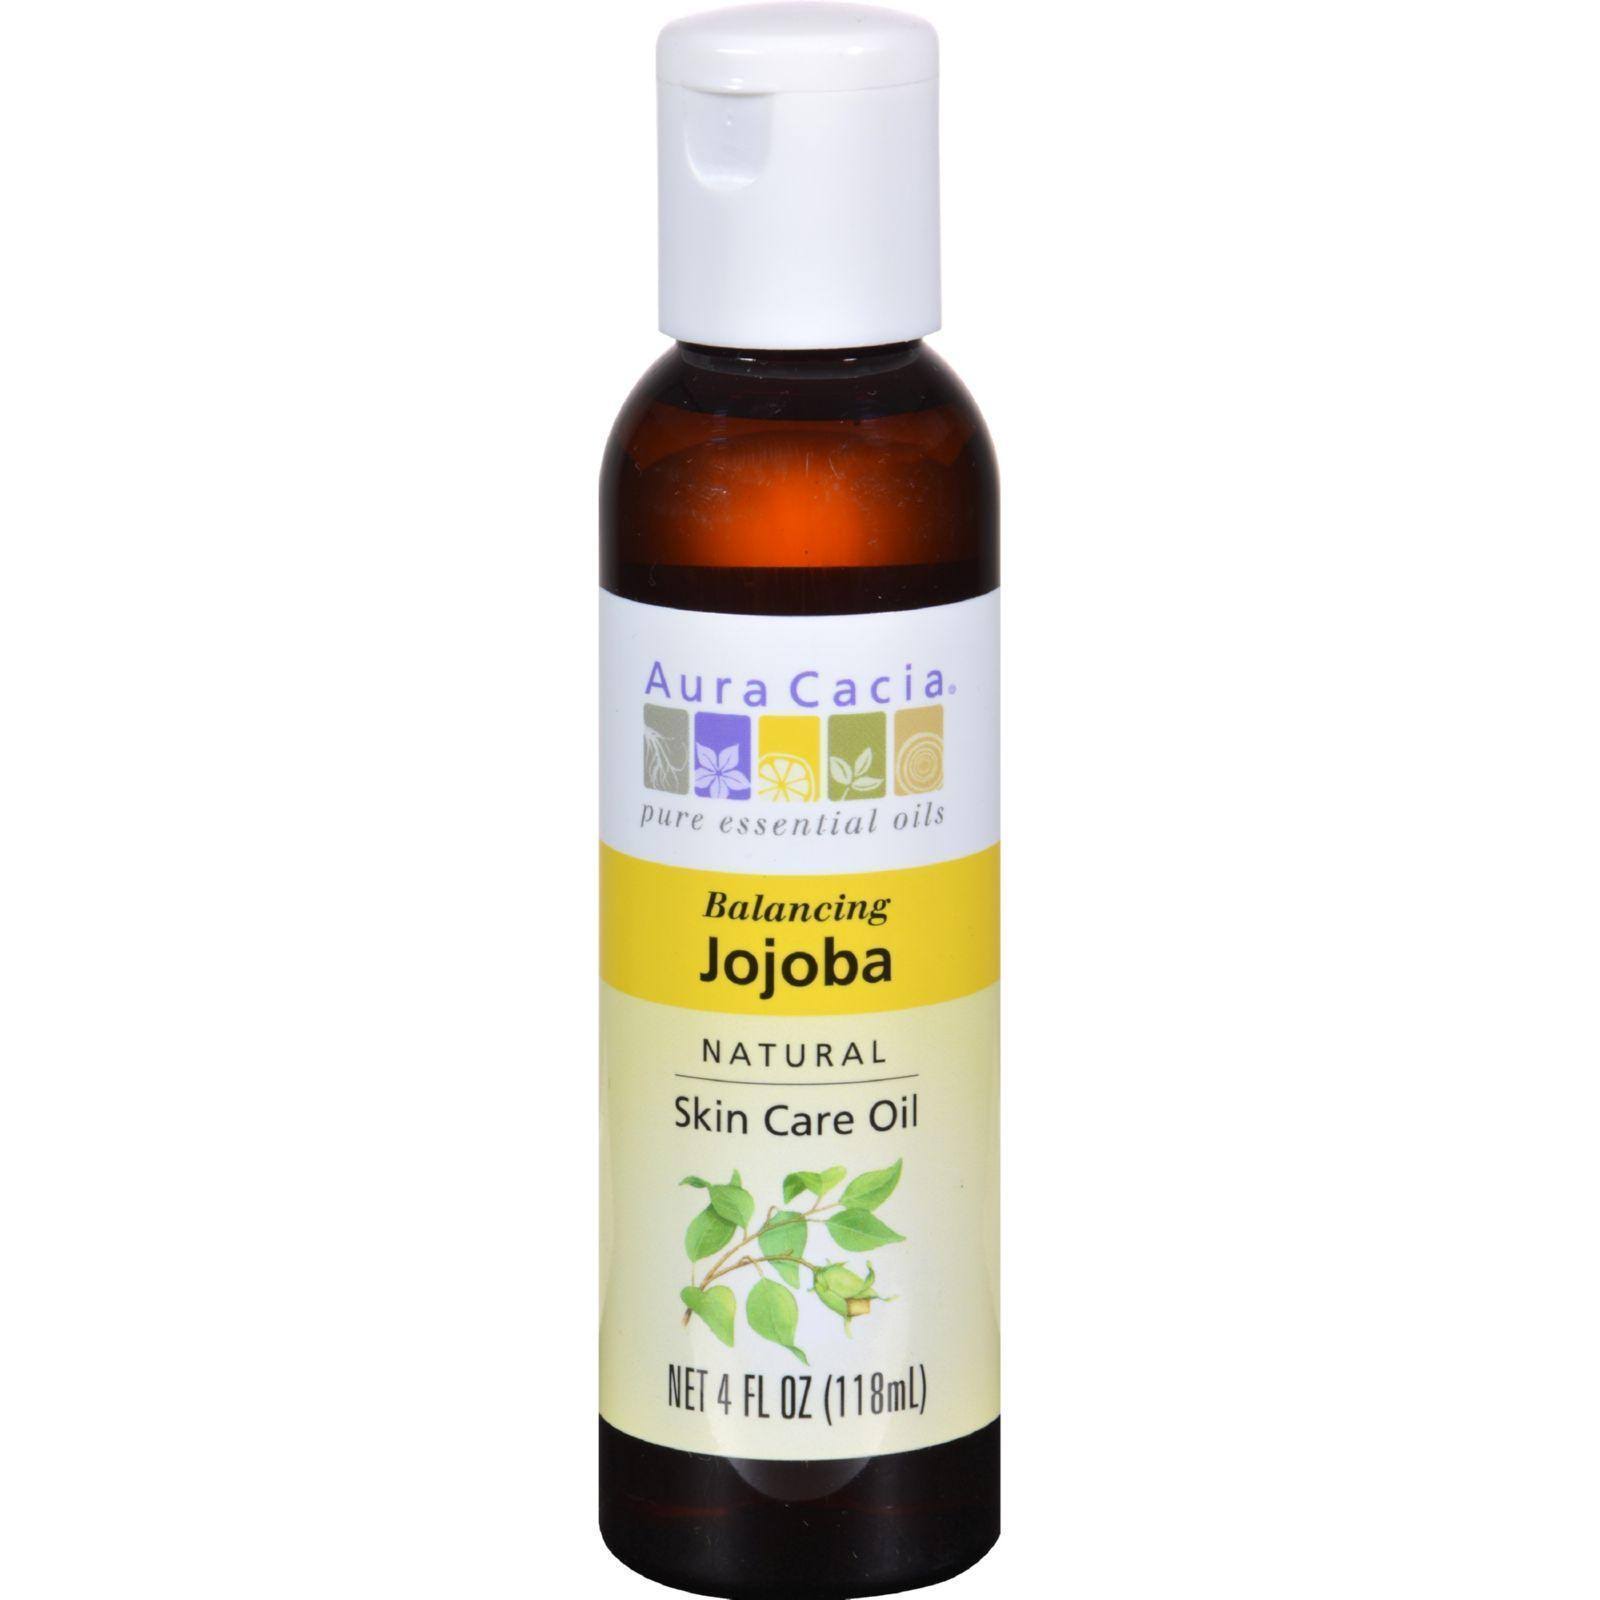 Aura Cacia Natural Skin Care Oil - Jojoba, 4oz